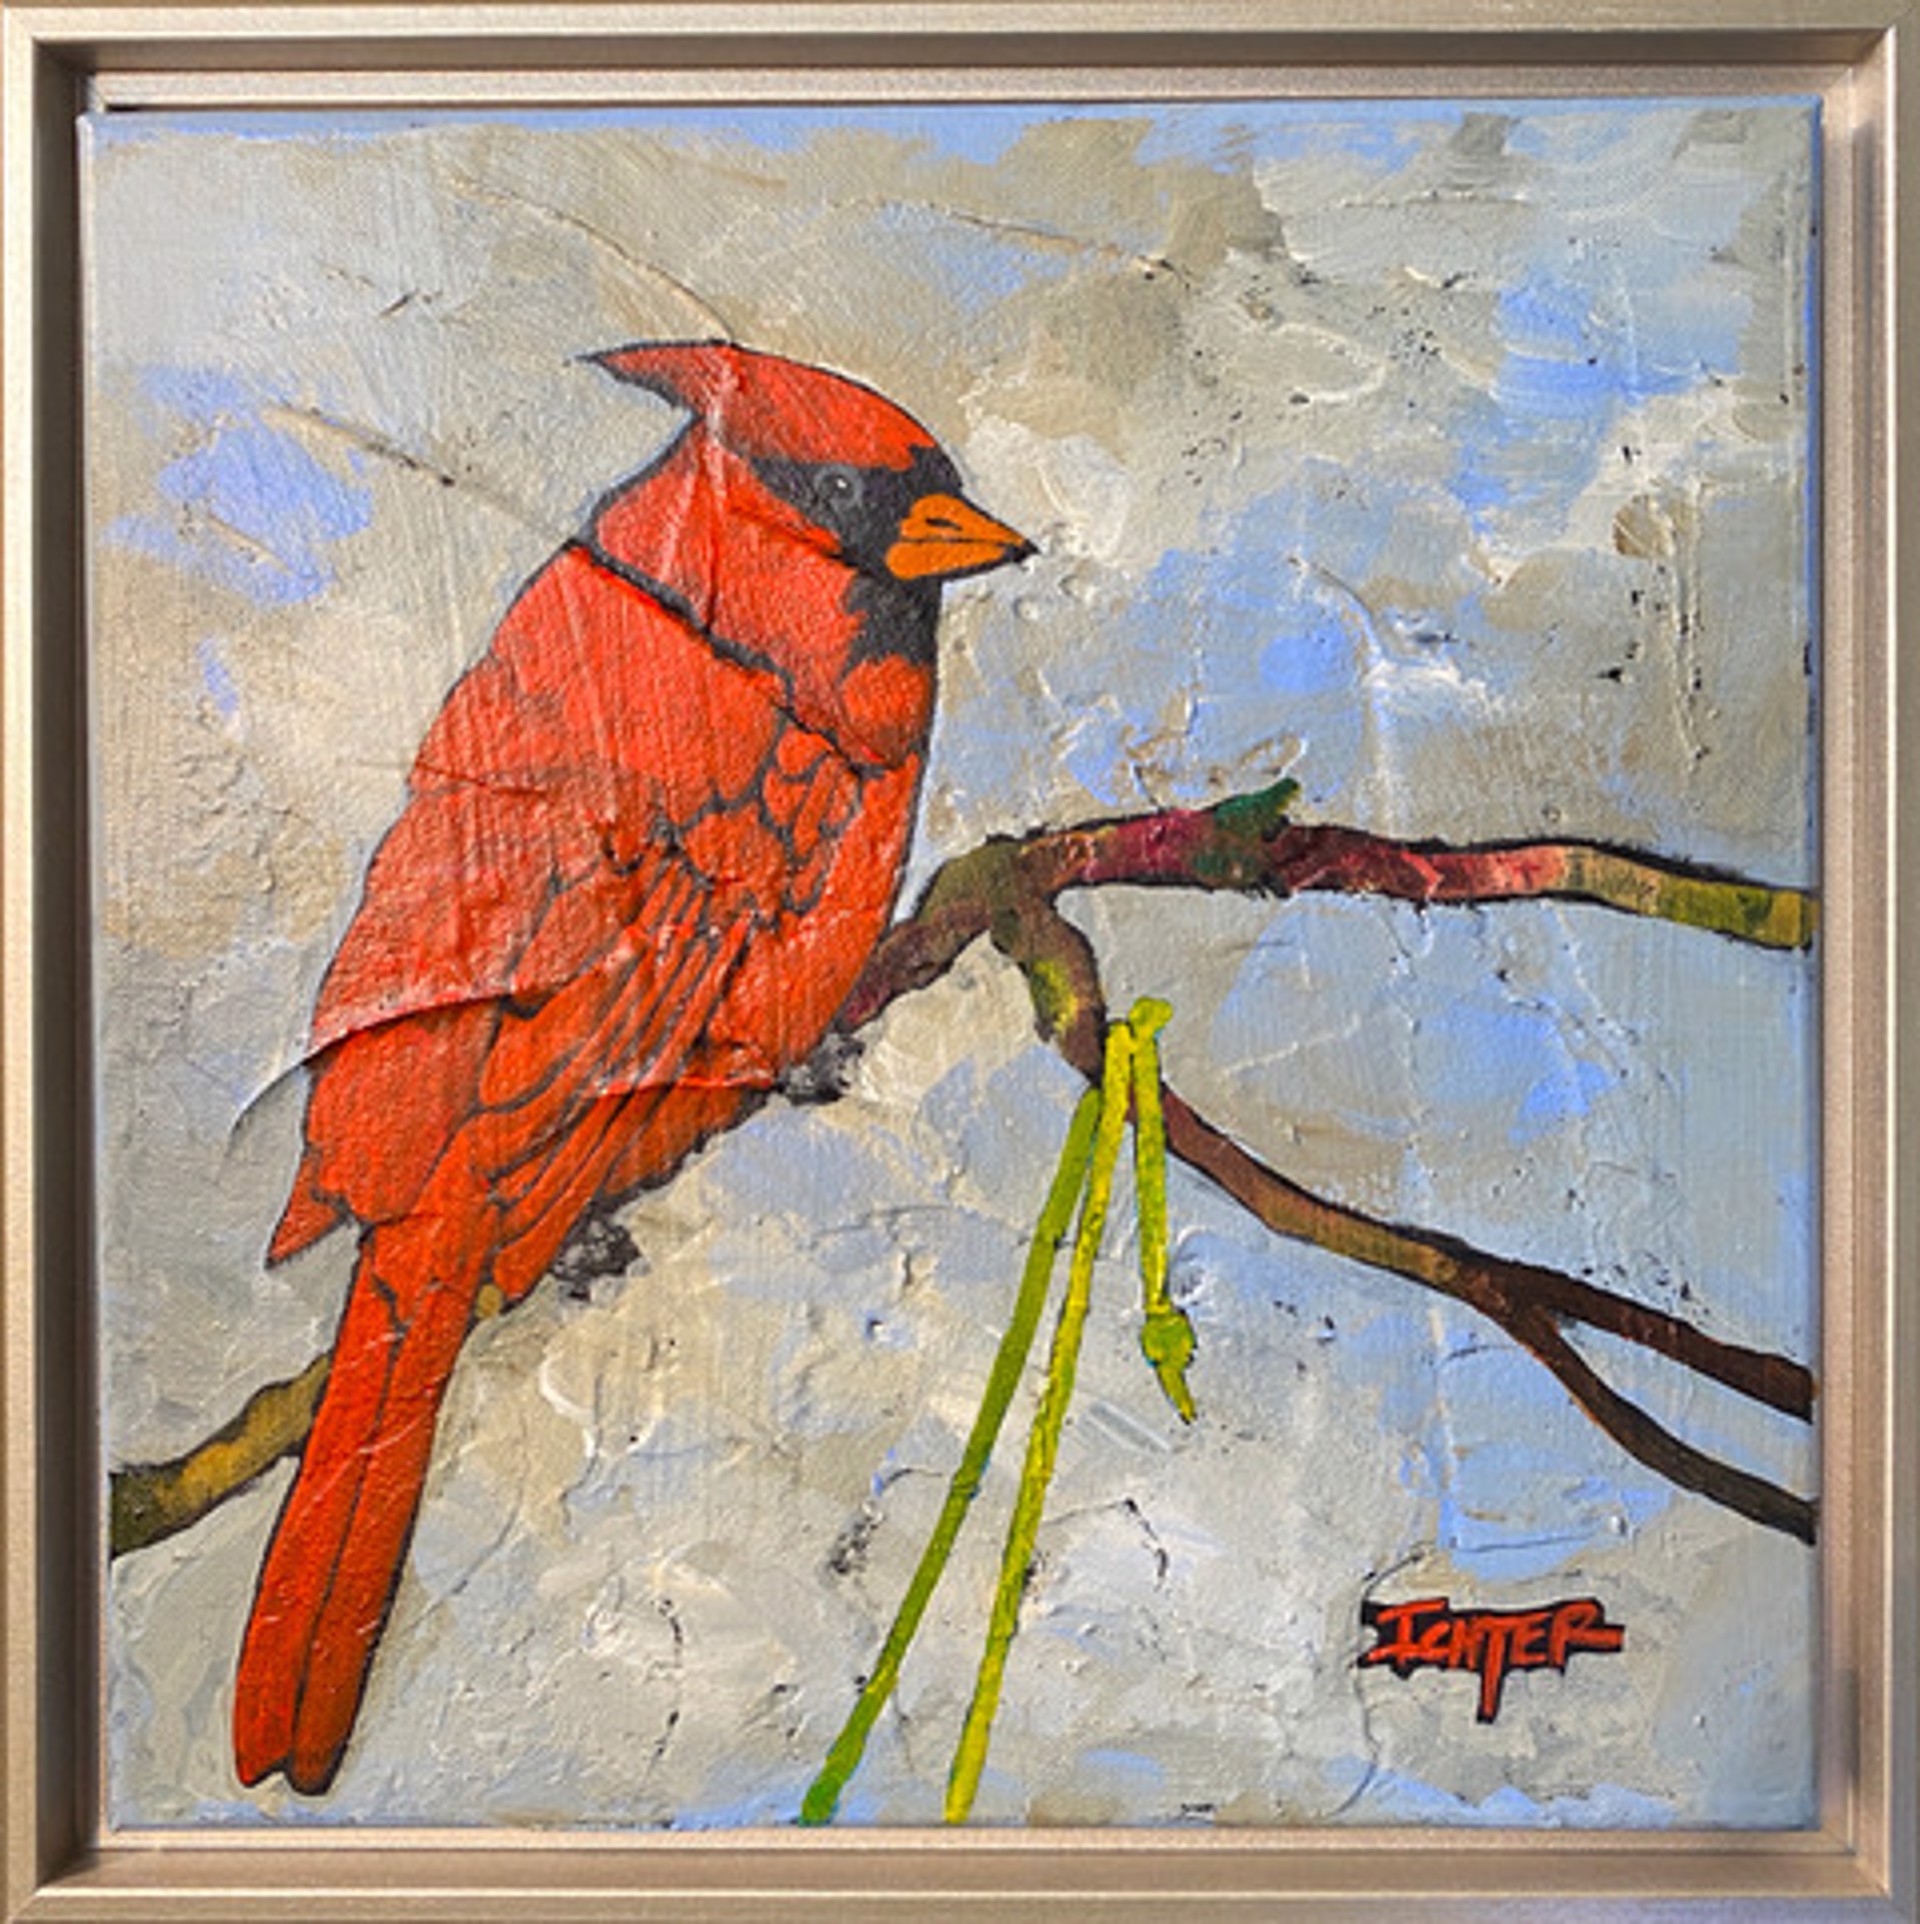 When Dreams Were Free, Male Cardinal by Robert Ichter